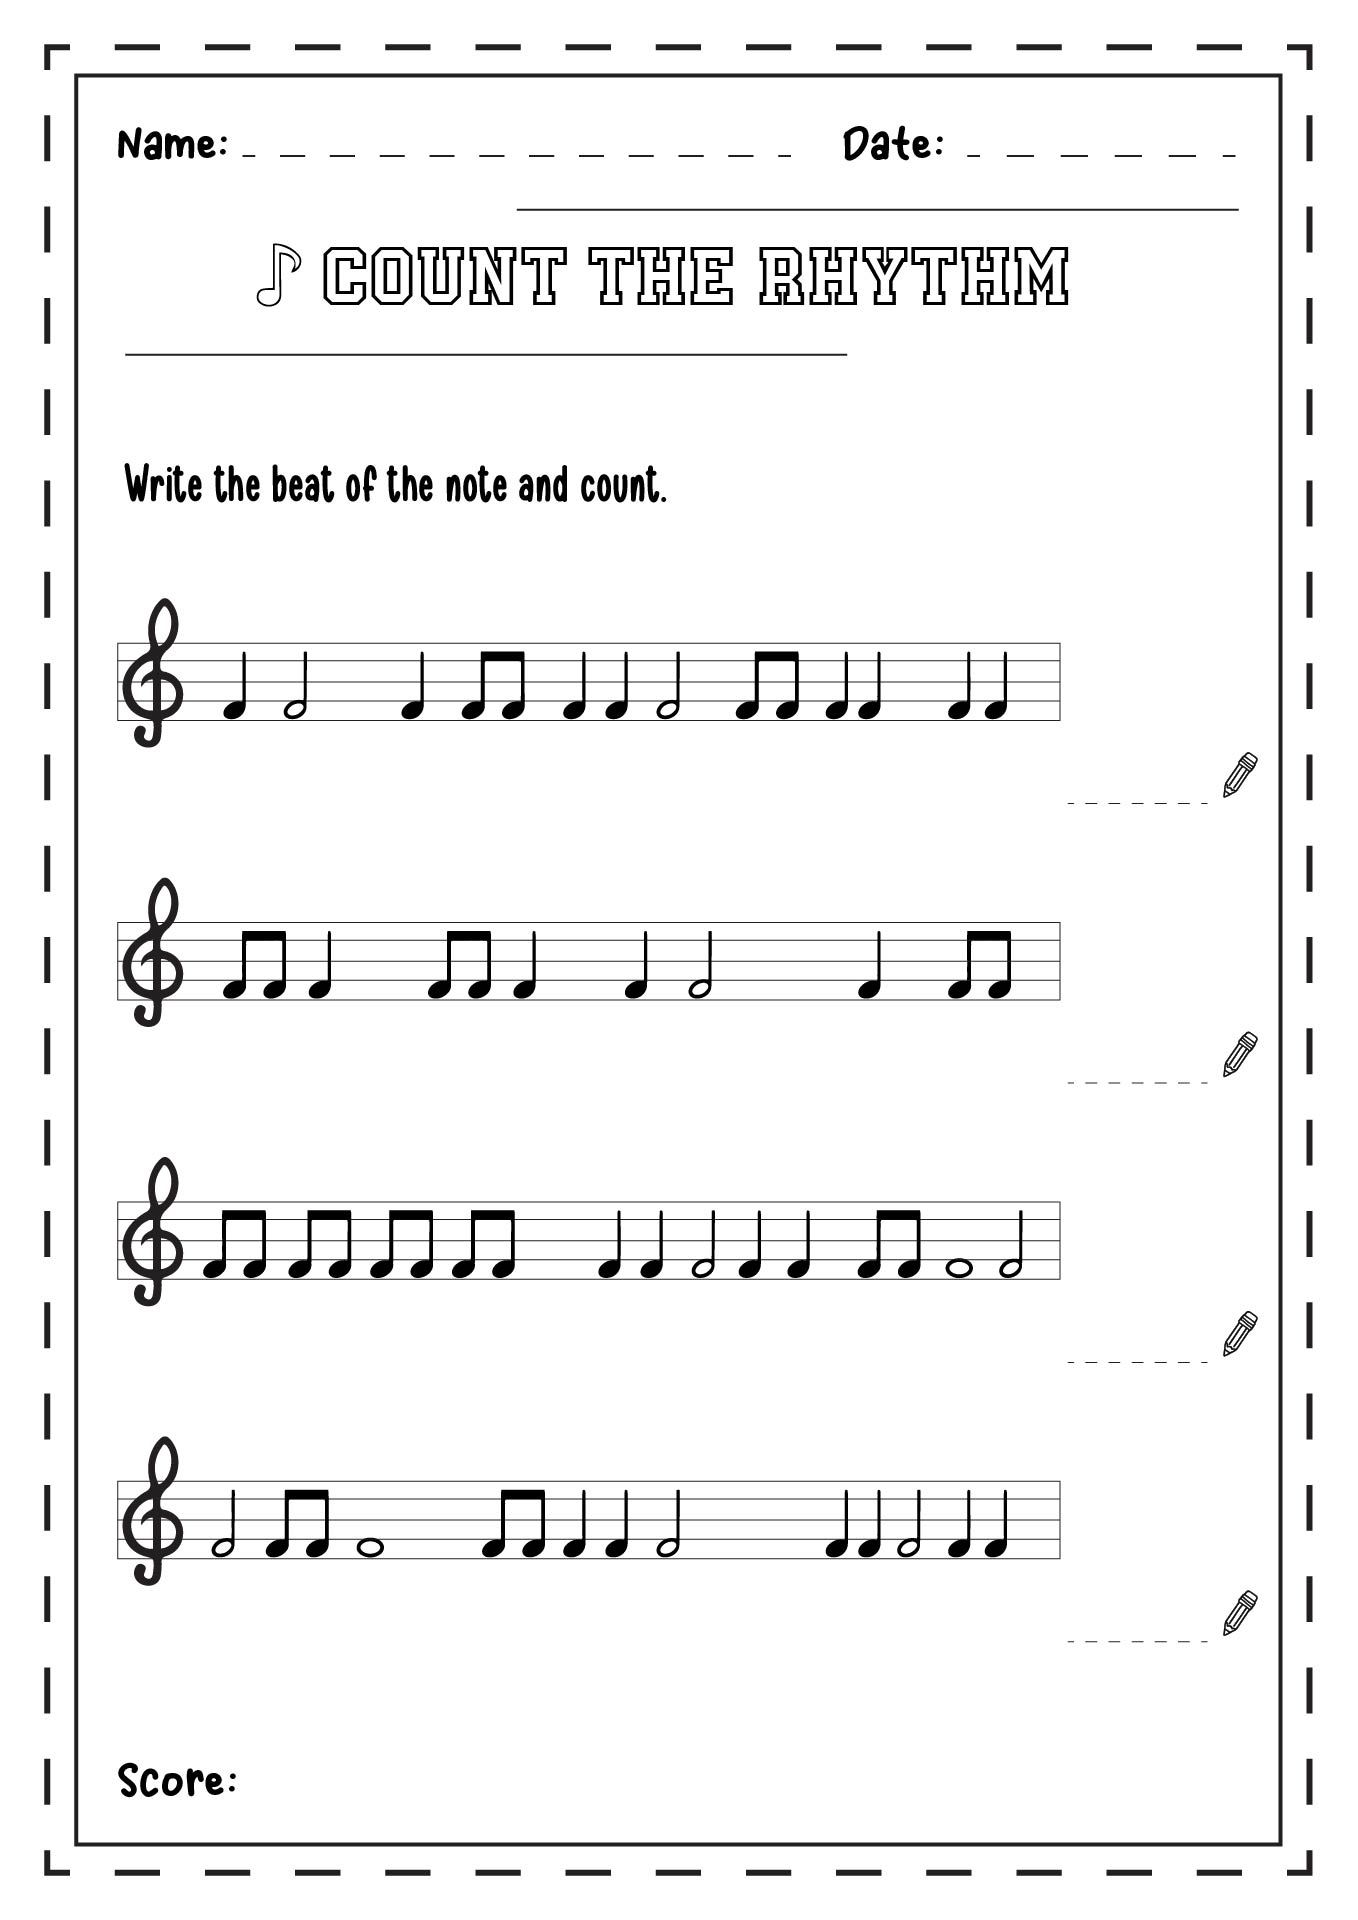 Quarter Eighth Note Rhythms Image